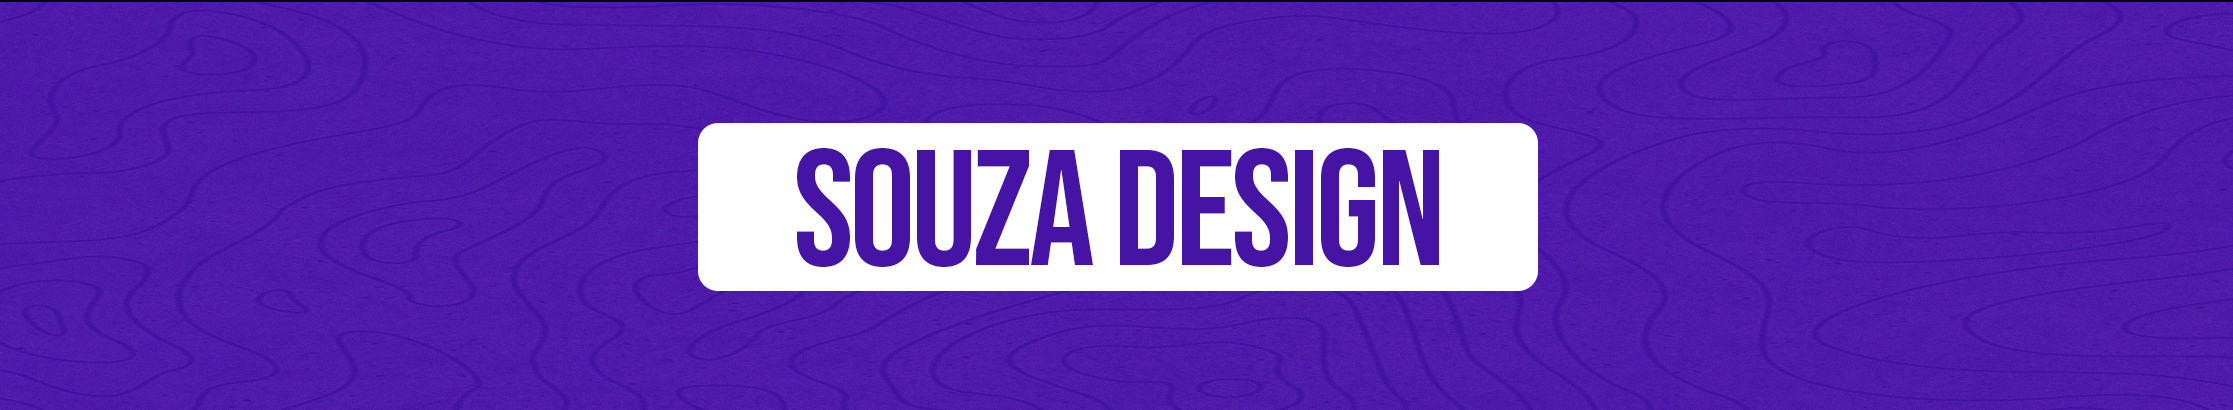 Baner profilu użytkownika Souza Design